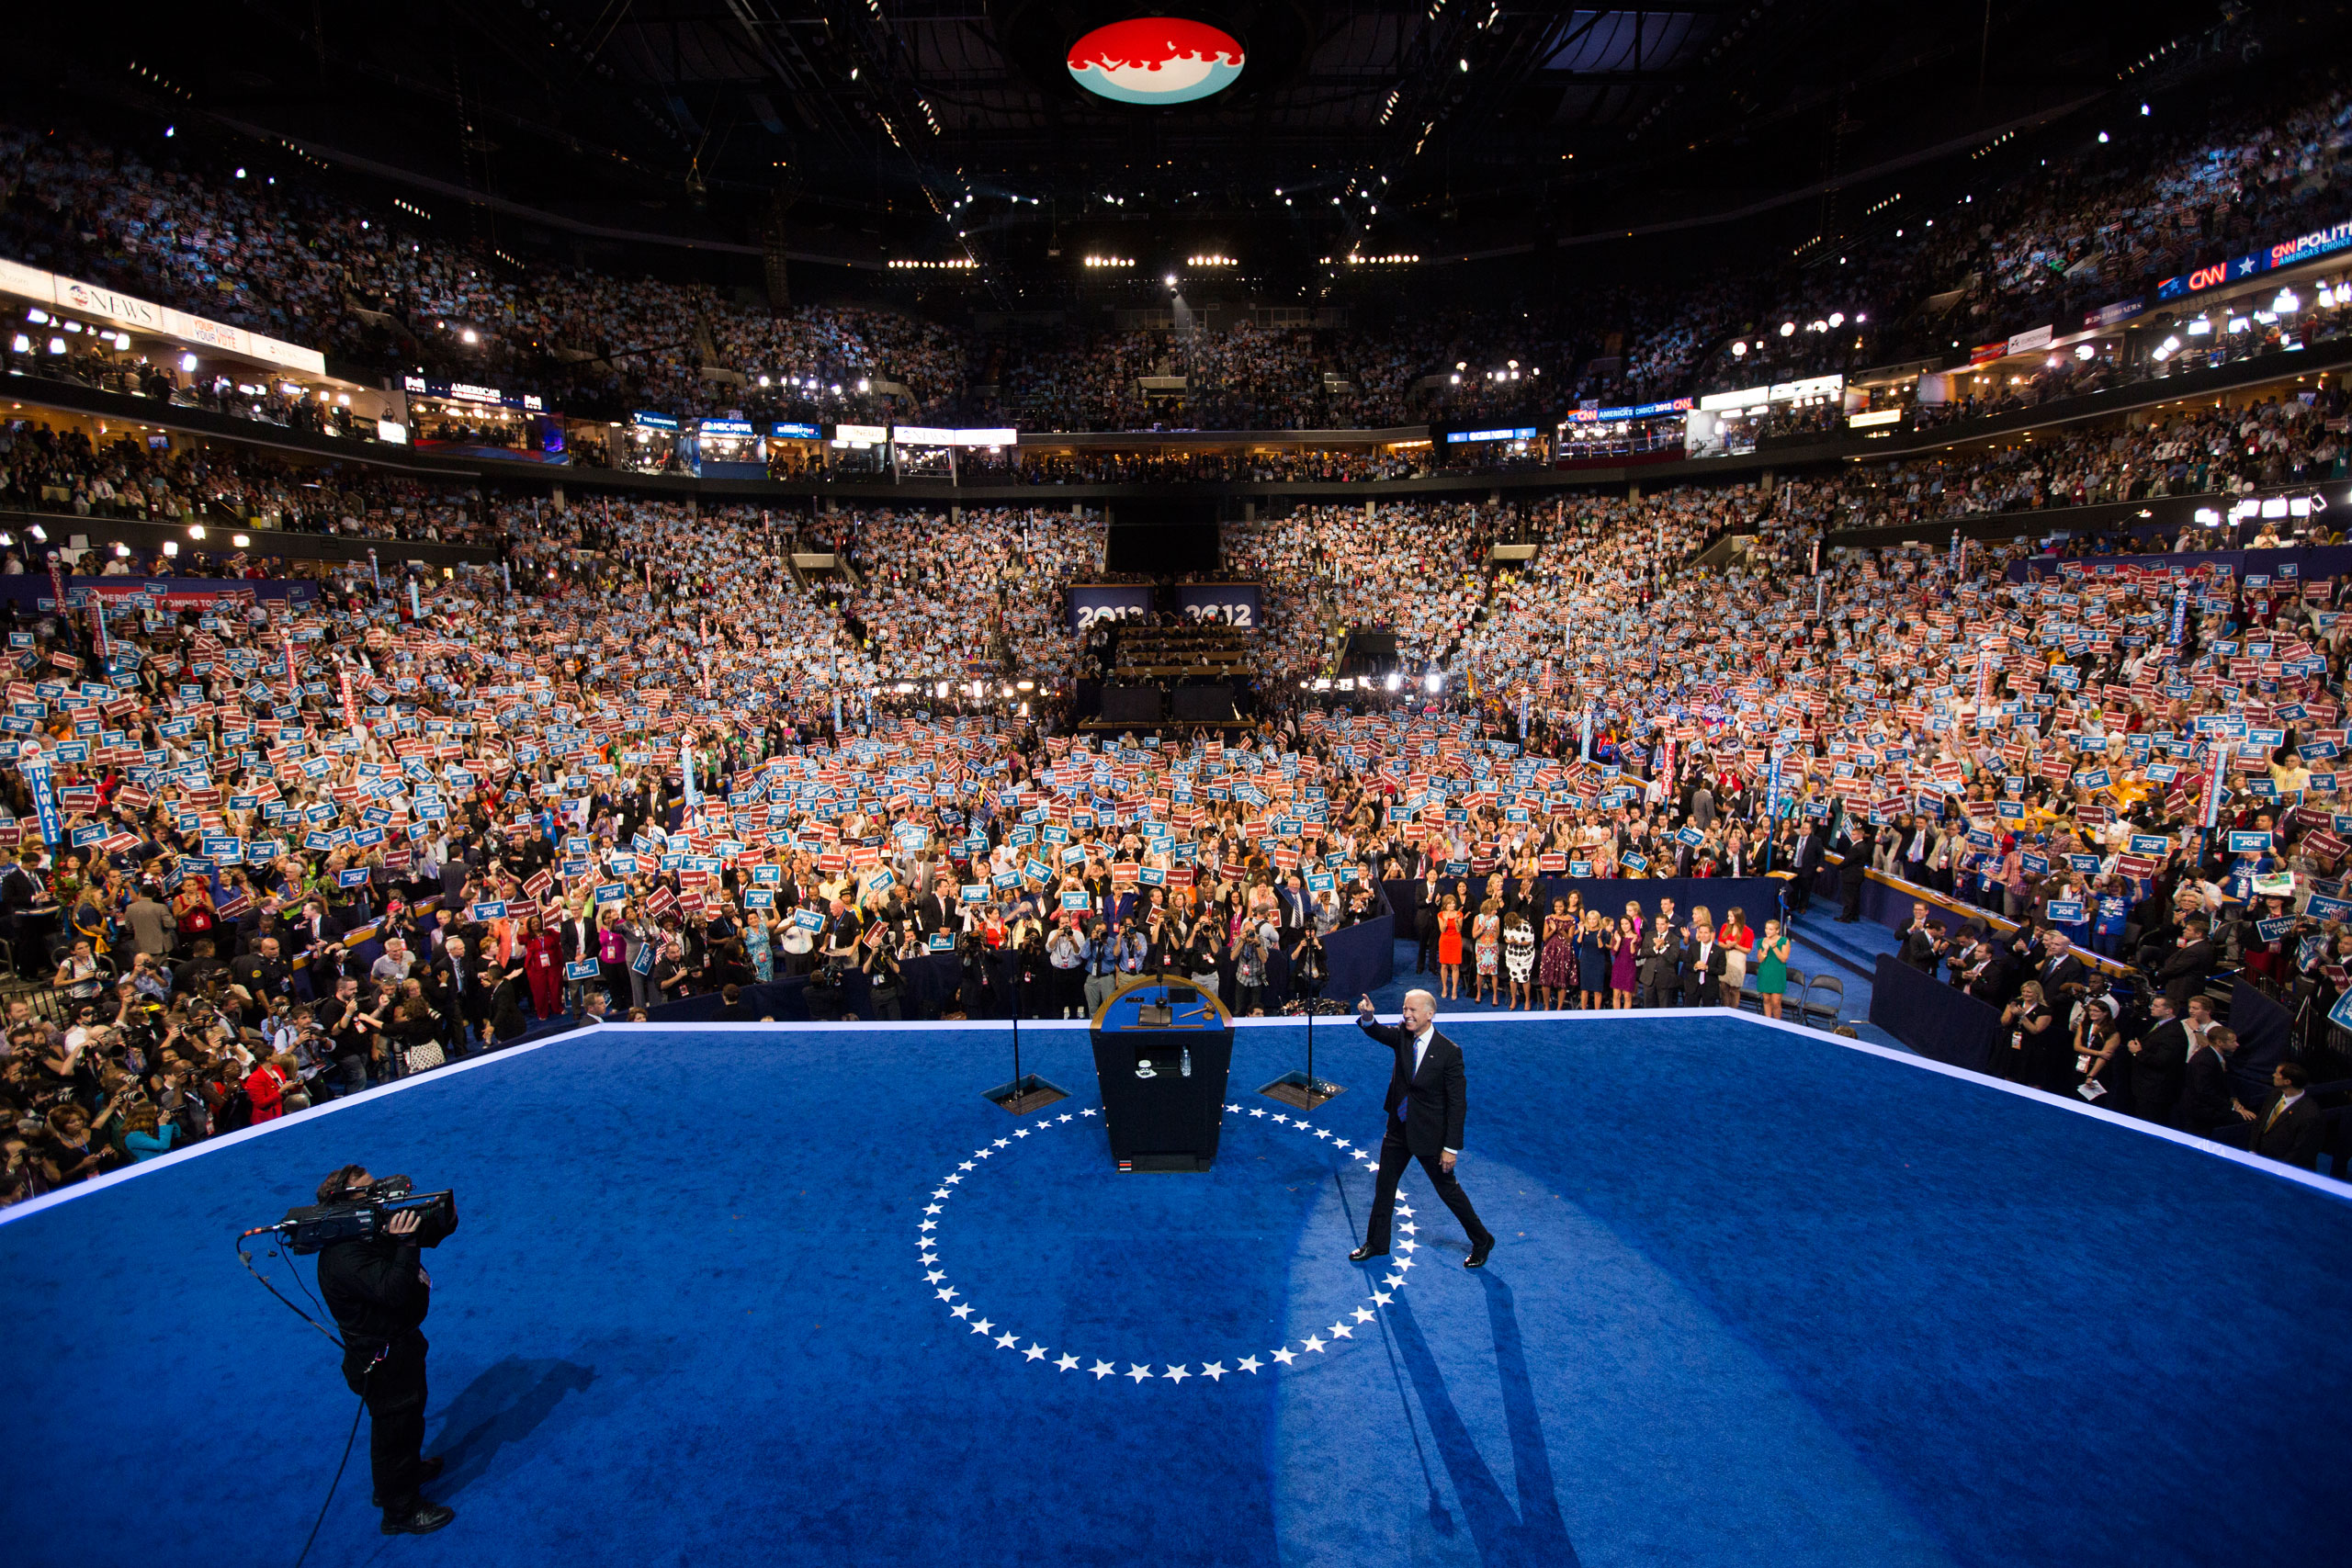 Joe Biden speaks at the Democratic National Convention in Charlotte, N.C., on Sept. 06, 2012.